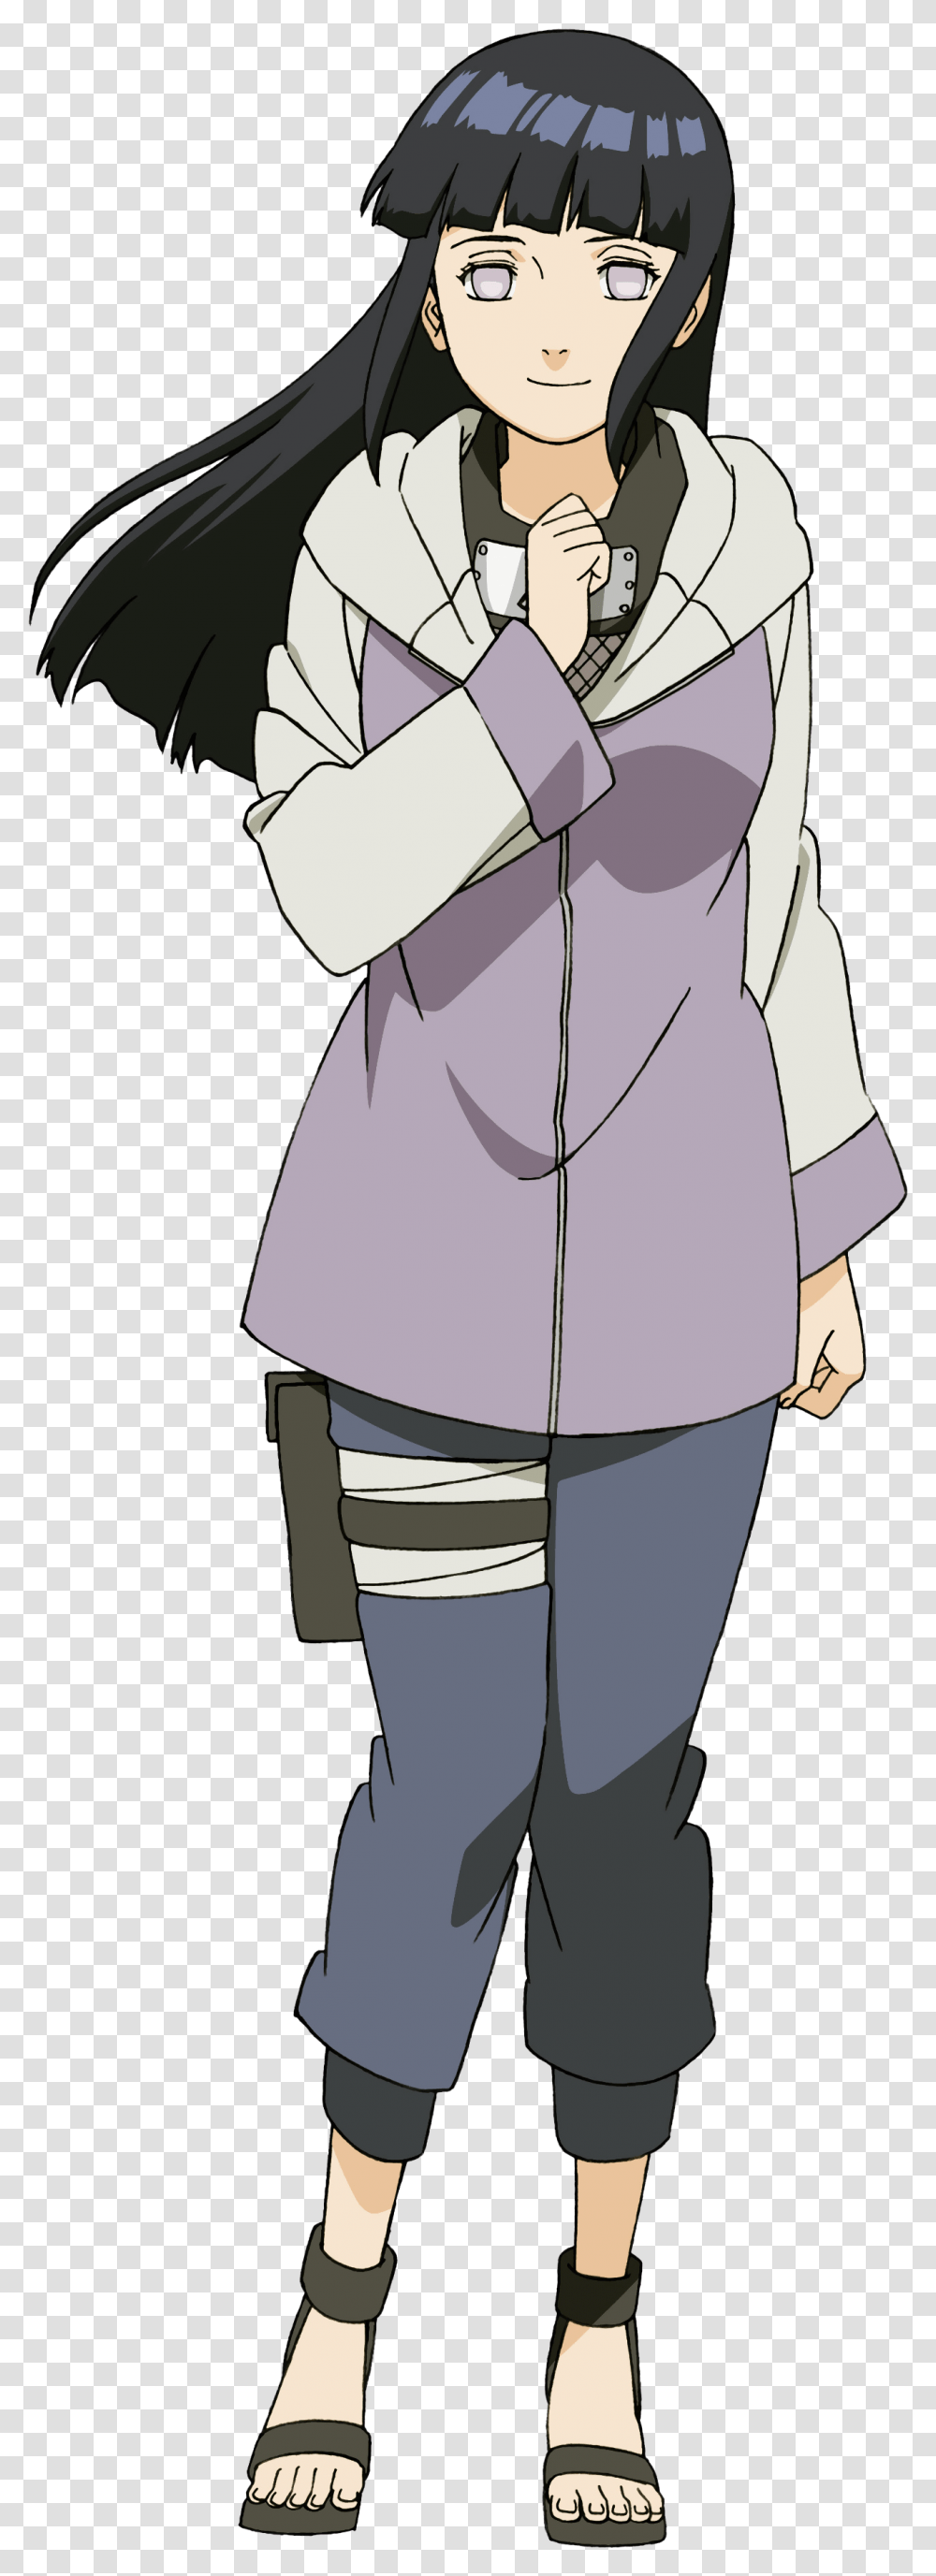 Naruto Shippuden Pic Hinata Hyuga, Person, Helmet, Sleeve Transparent Png